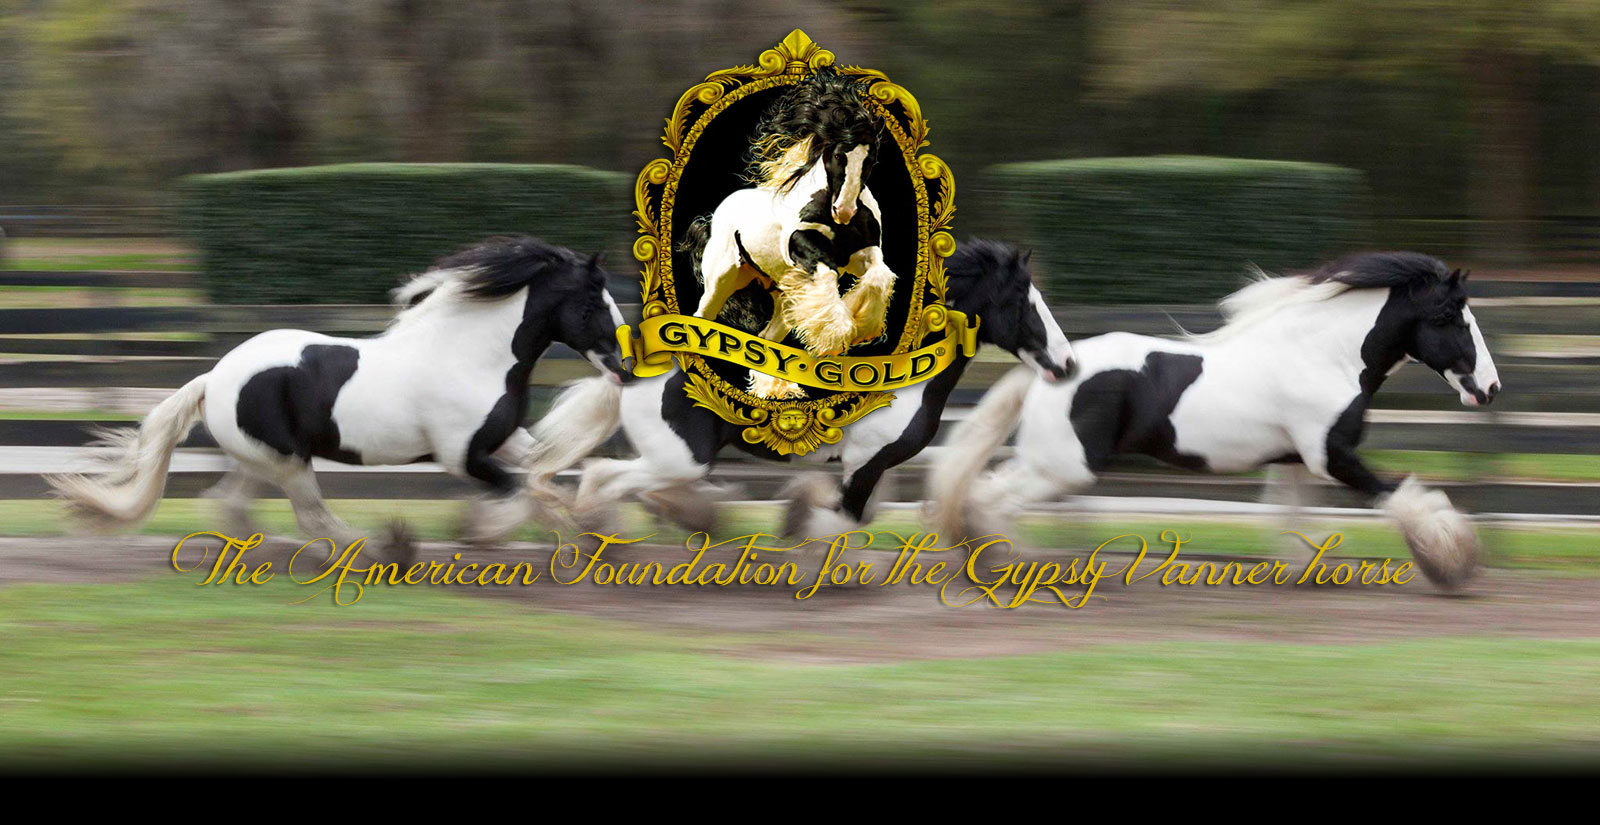 gypsy vanner horses